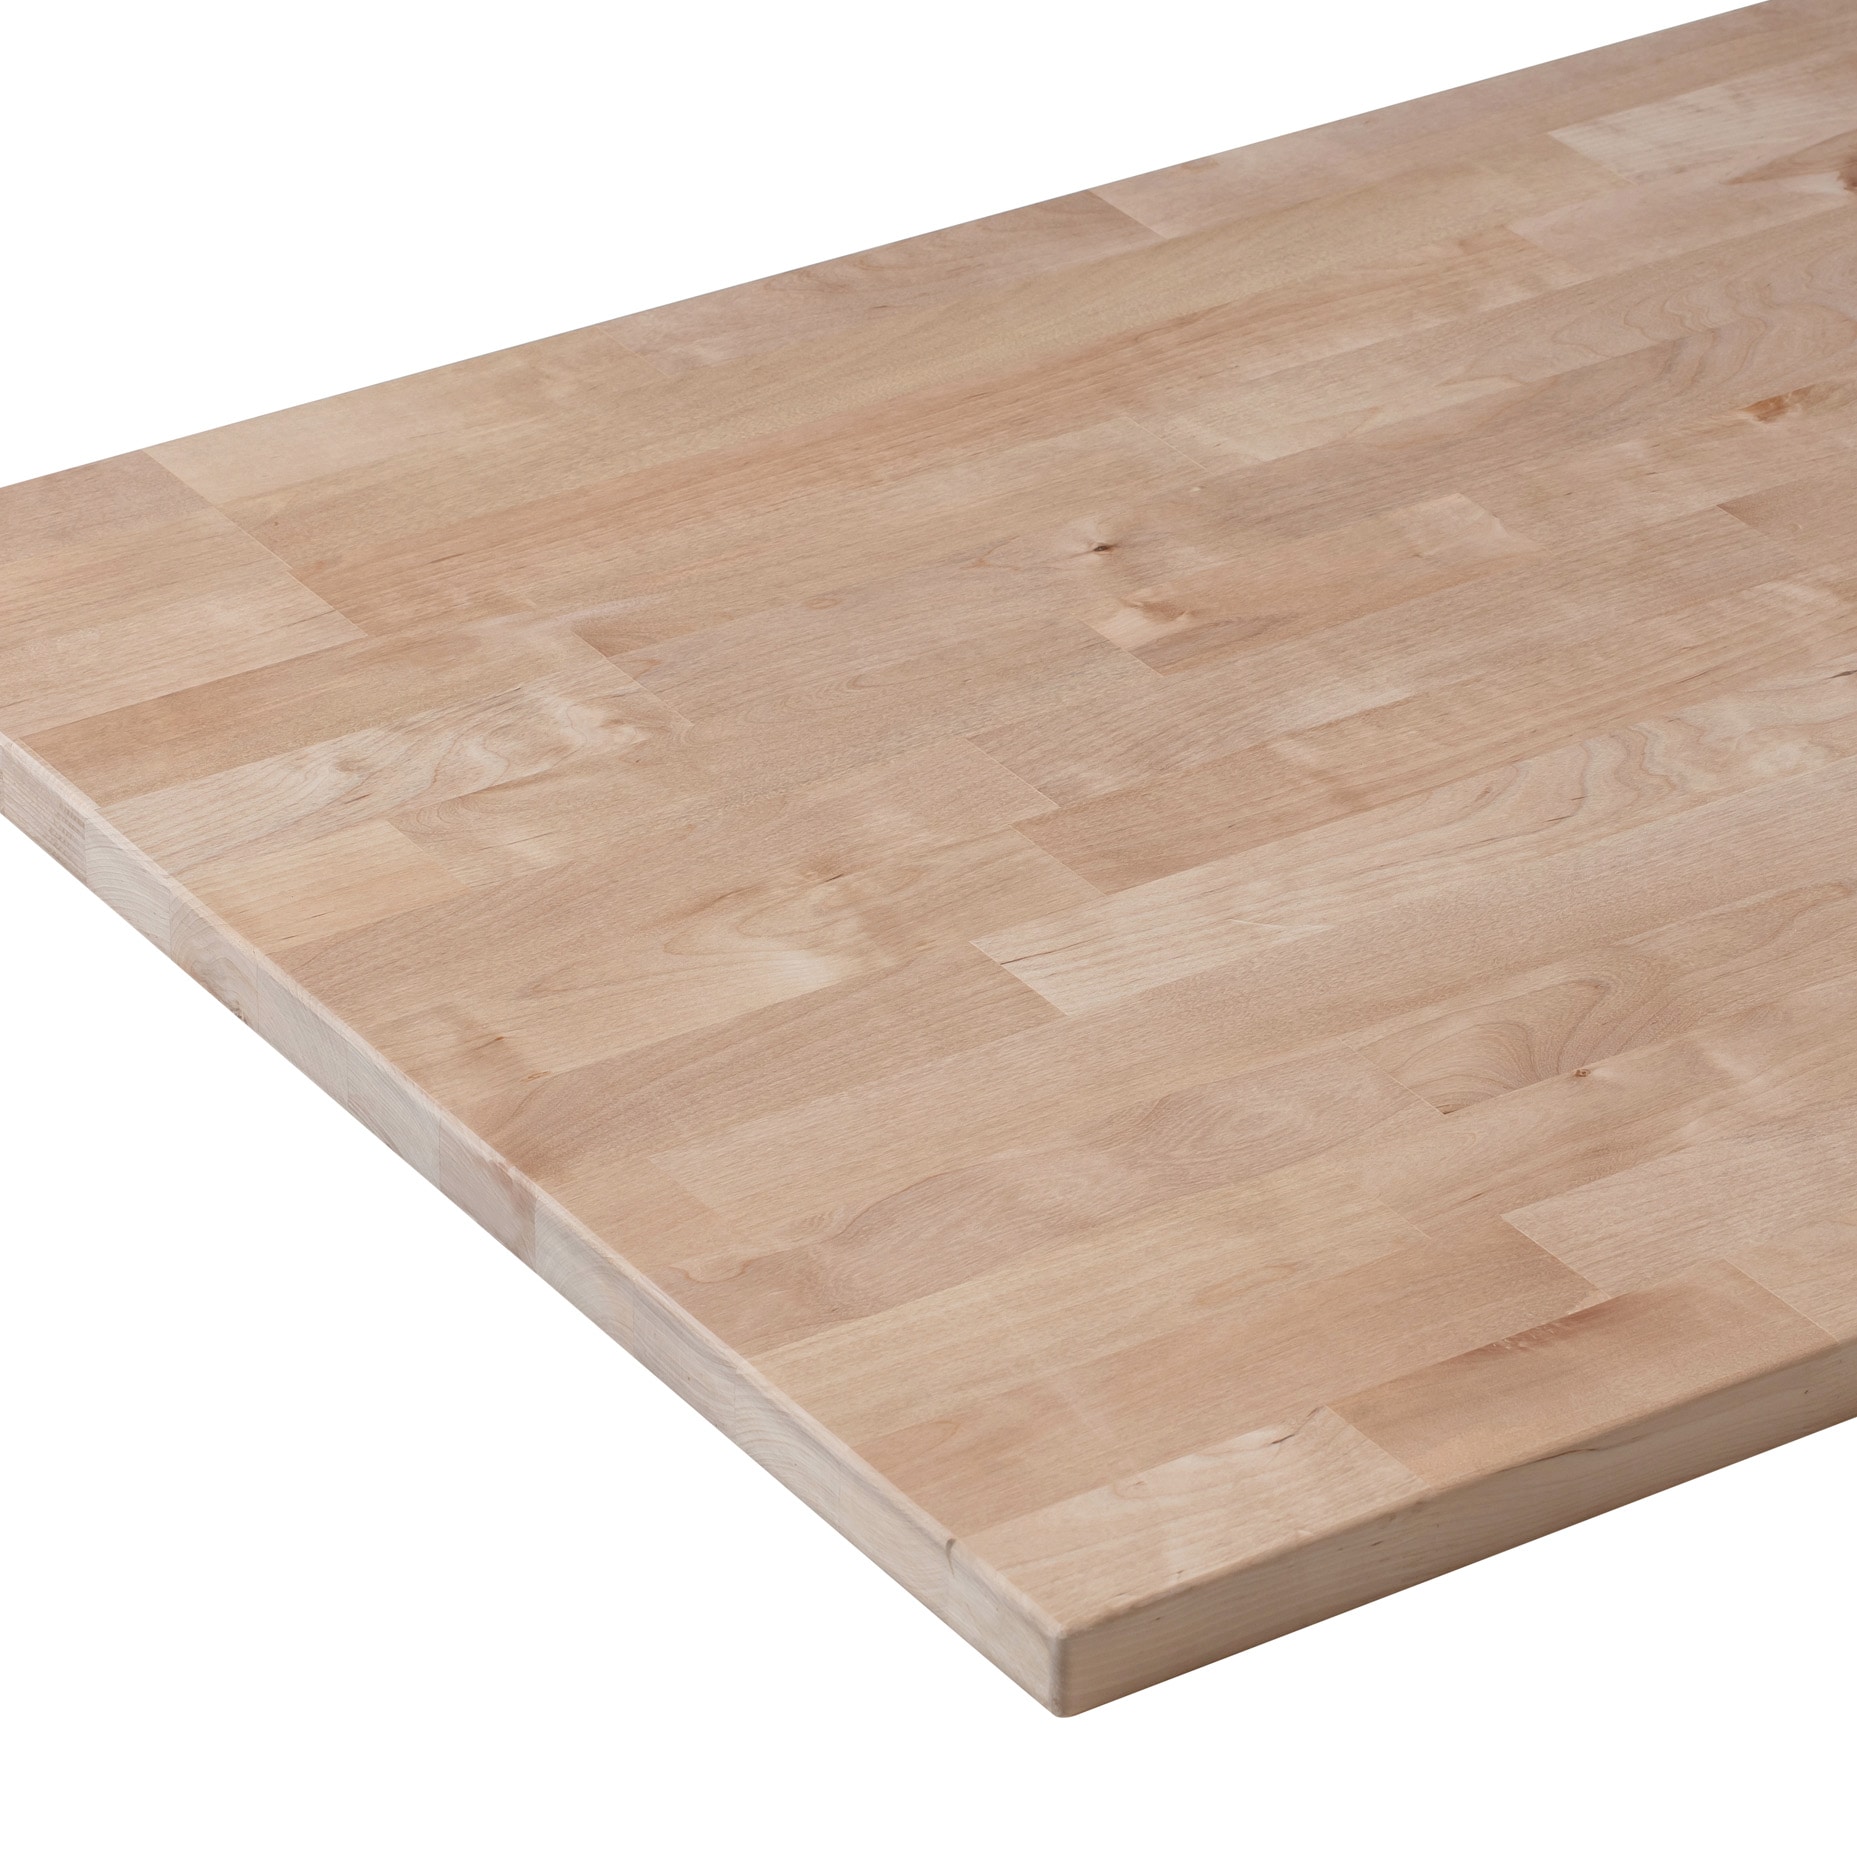 Folding Cutting Board - Inspire Uplift